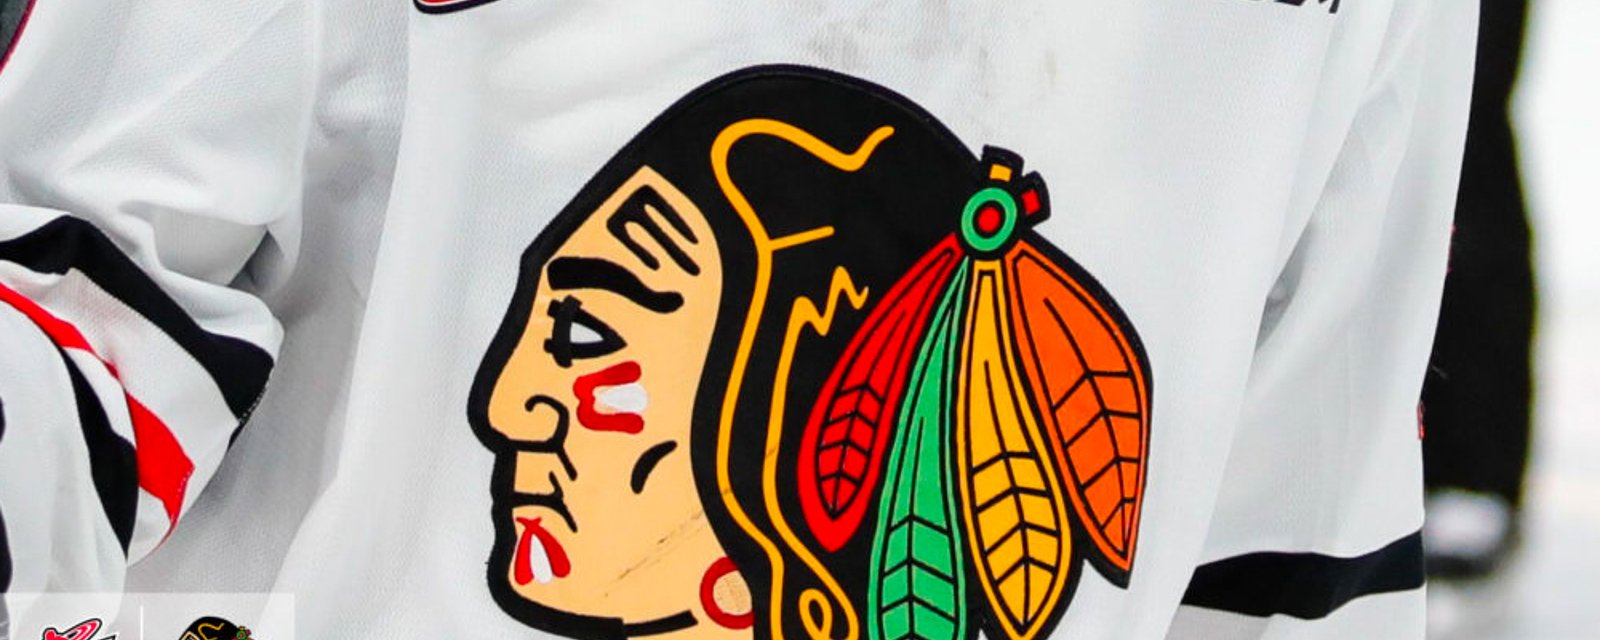 Portland Winterhawks drop iconic Chicago-based logo, citing racial insensitivity